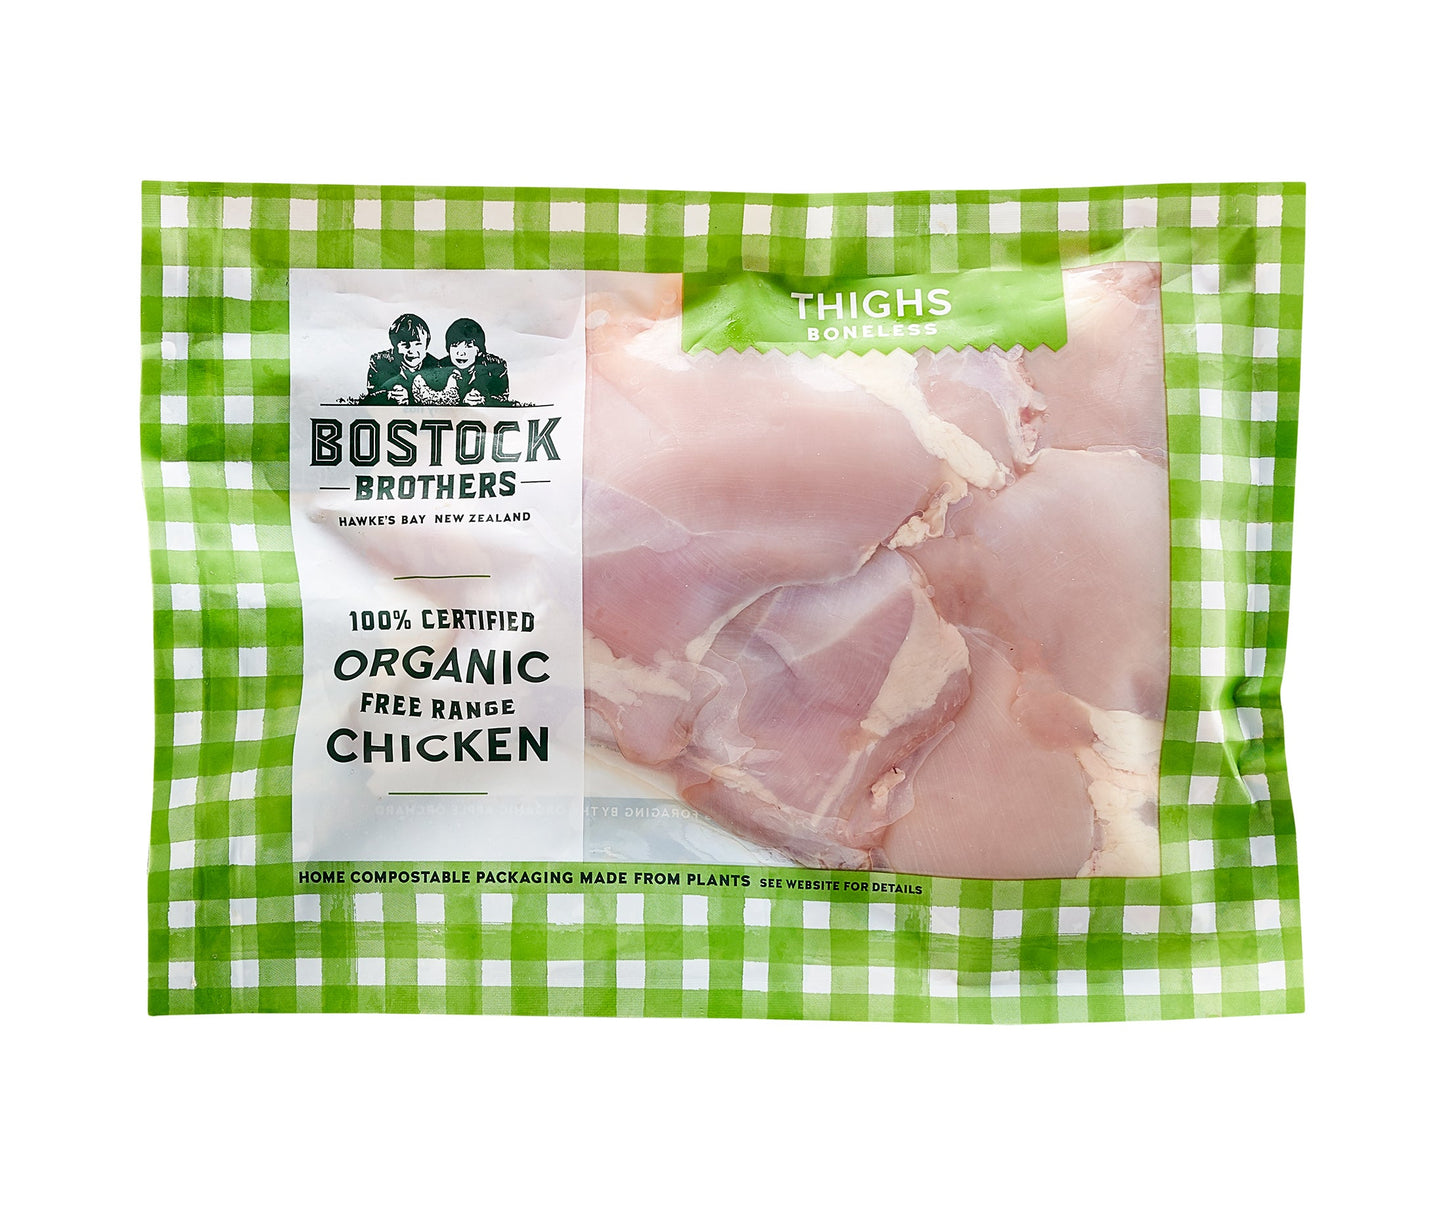 New Zealand Organic Skinless and Boneless Chicken Thigh 330g/pack - Prime Gourmet Online